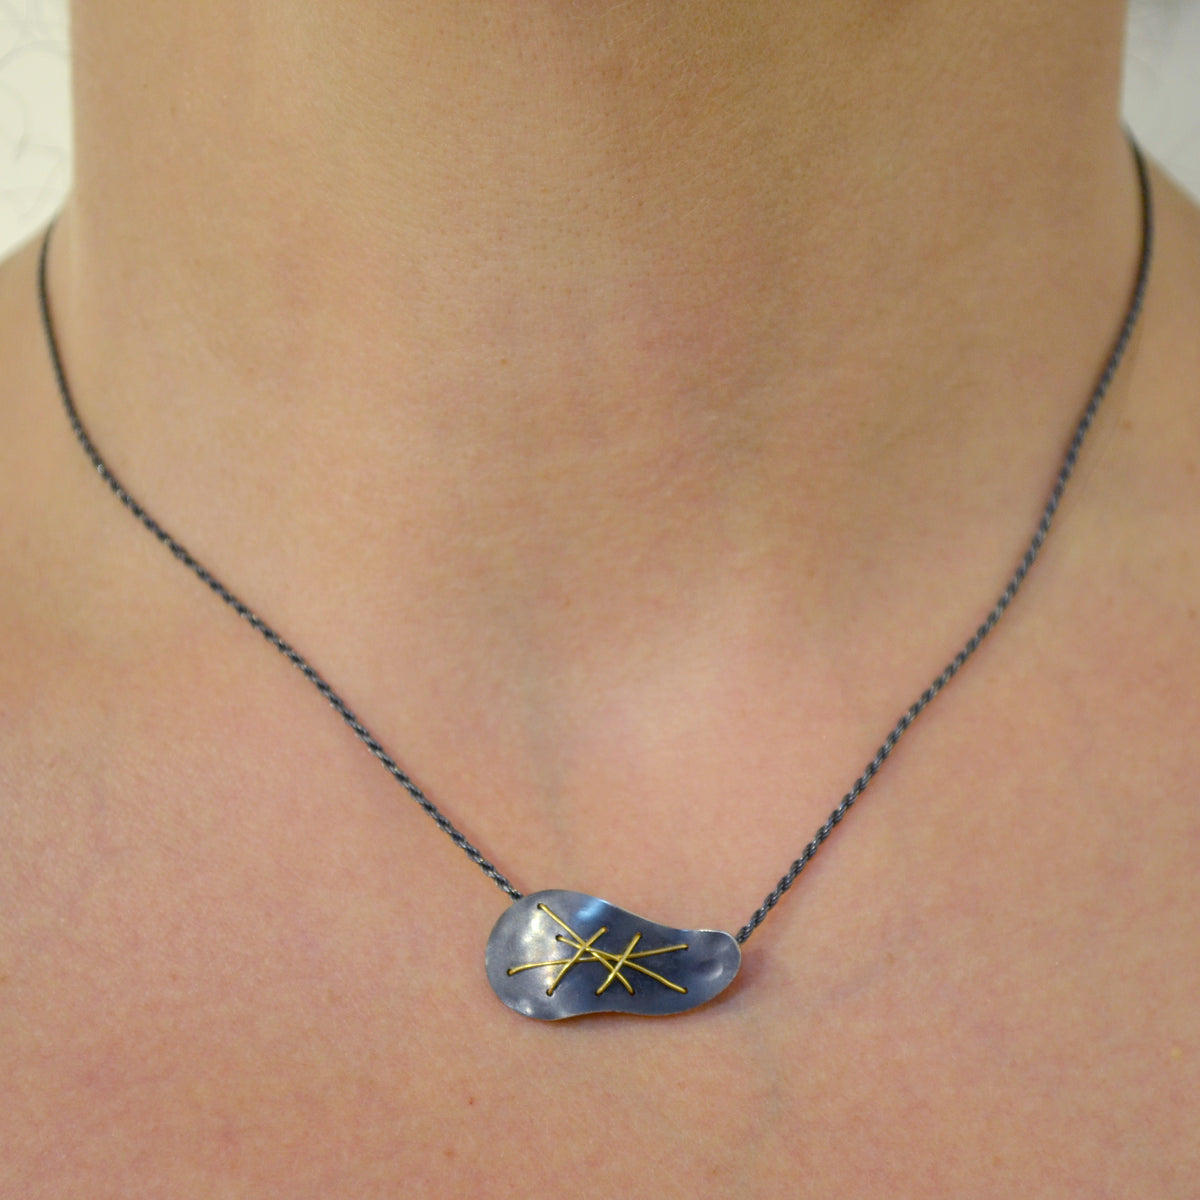 Suzanne Schwartz Single Cascade Necklace pendant on chain - horizontal